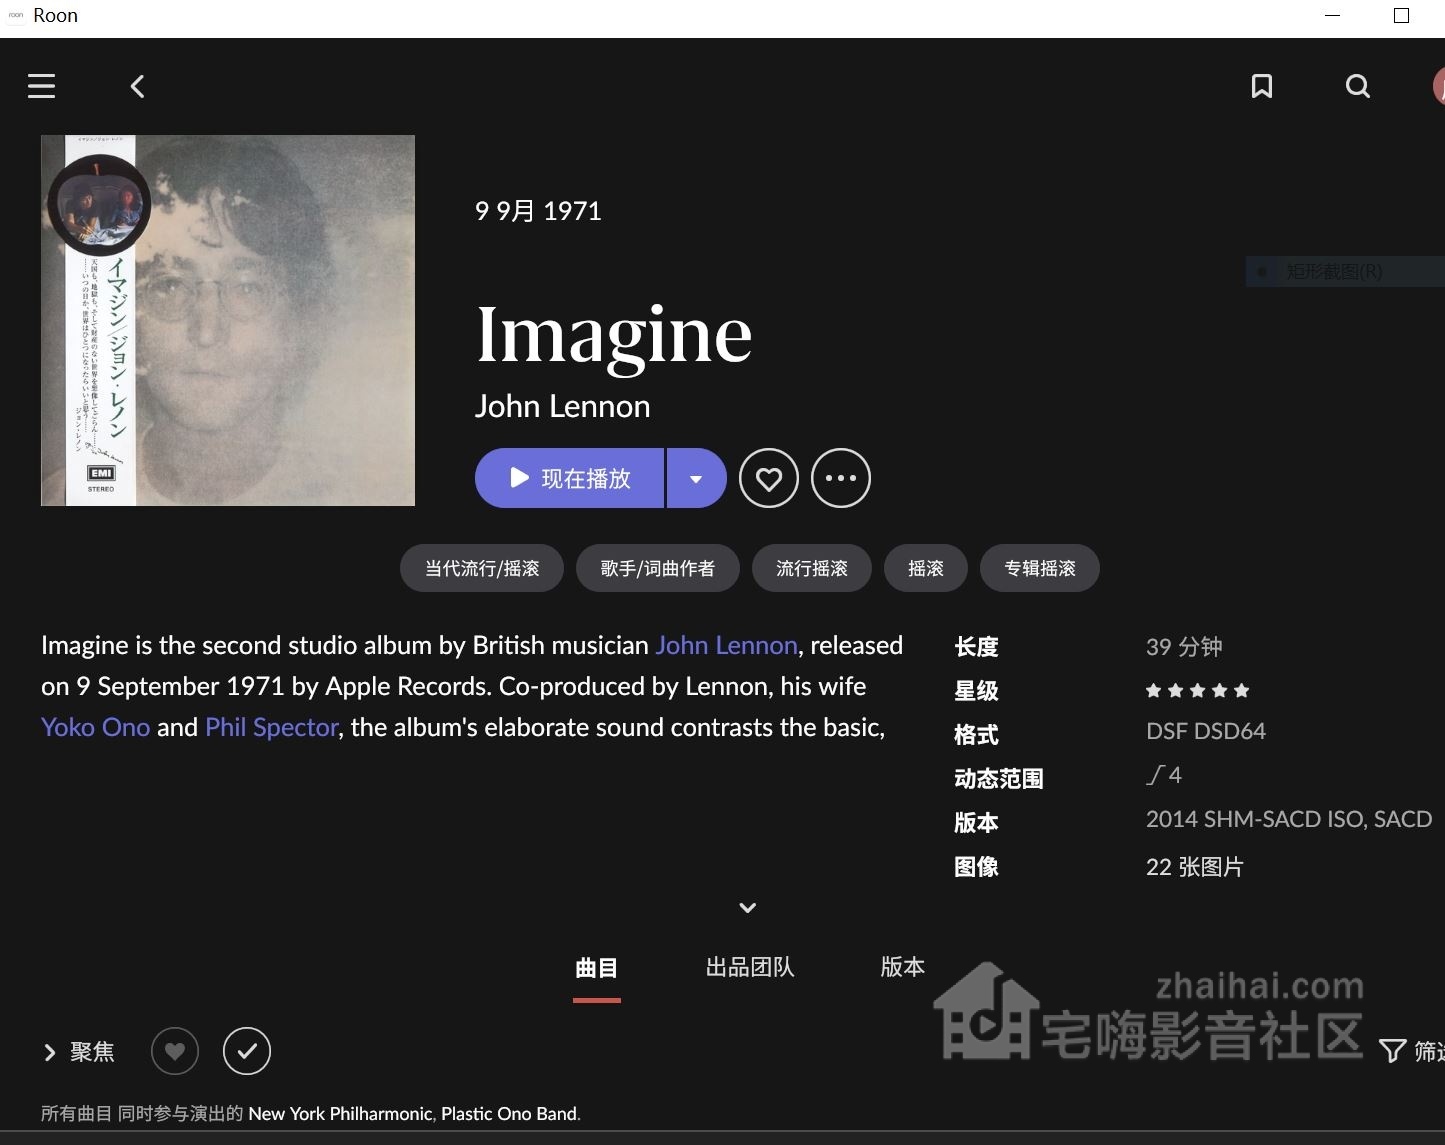 Lennon - Imagine 2014 japan shm-sacd.jpg